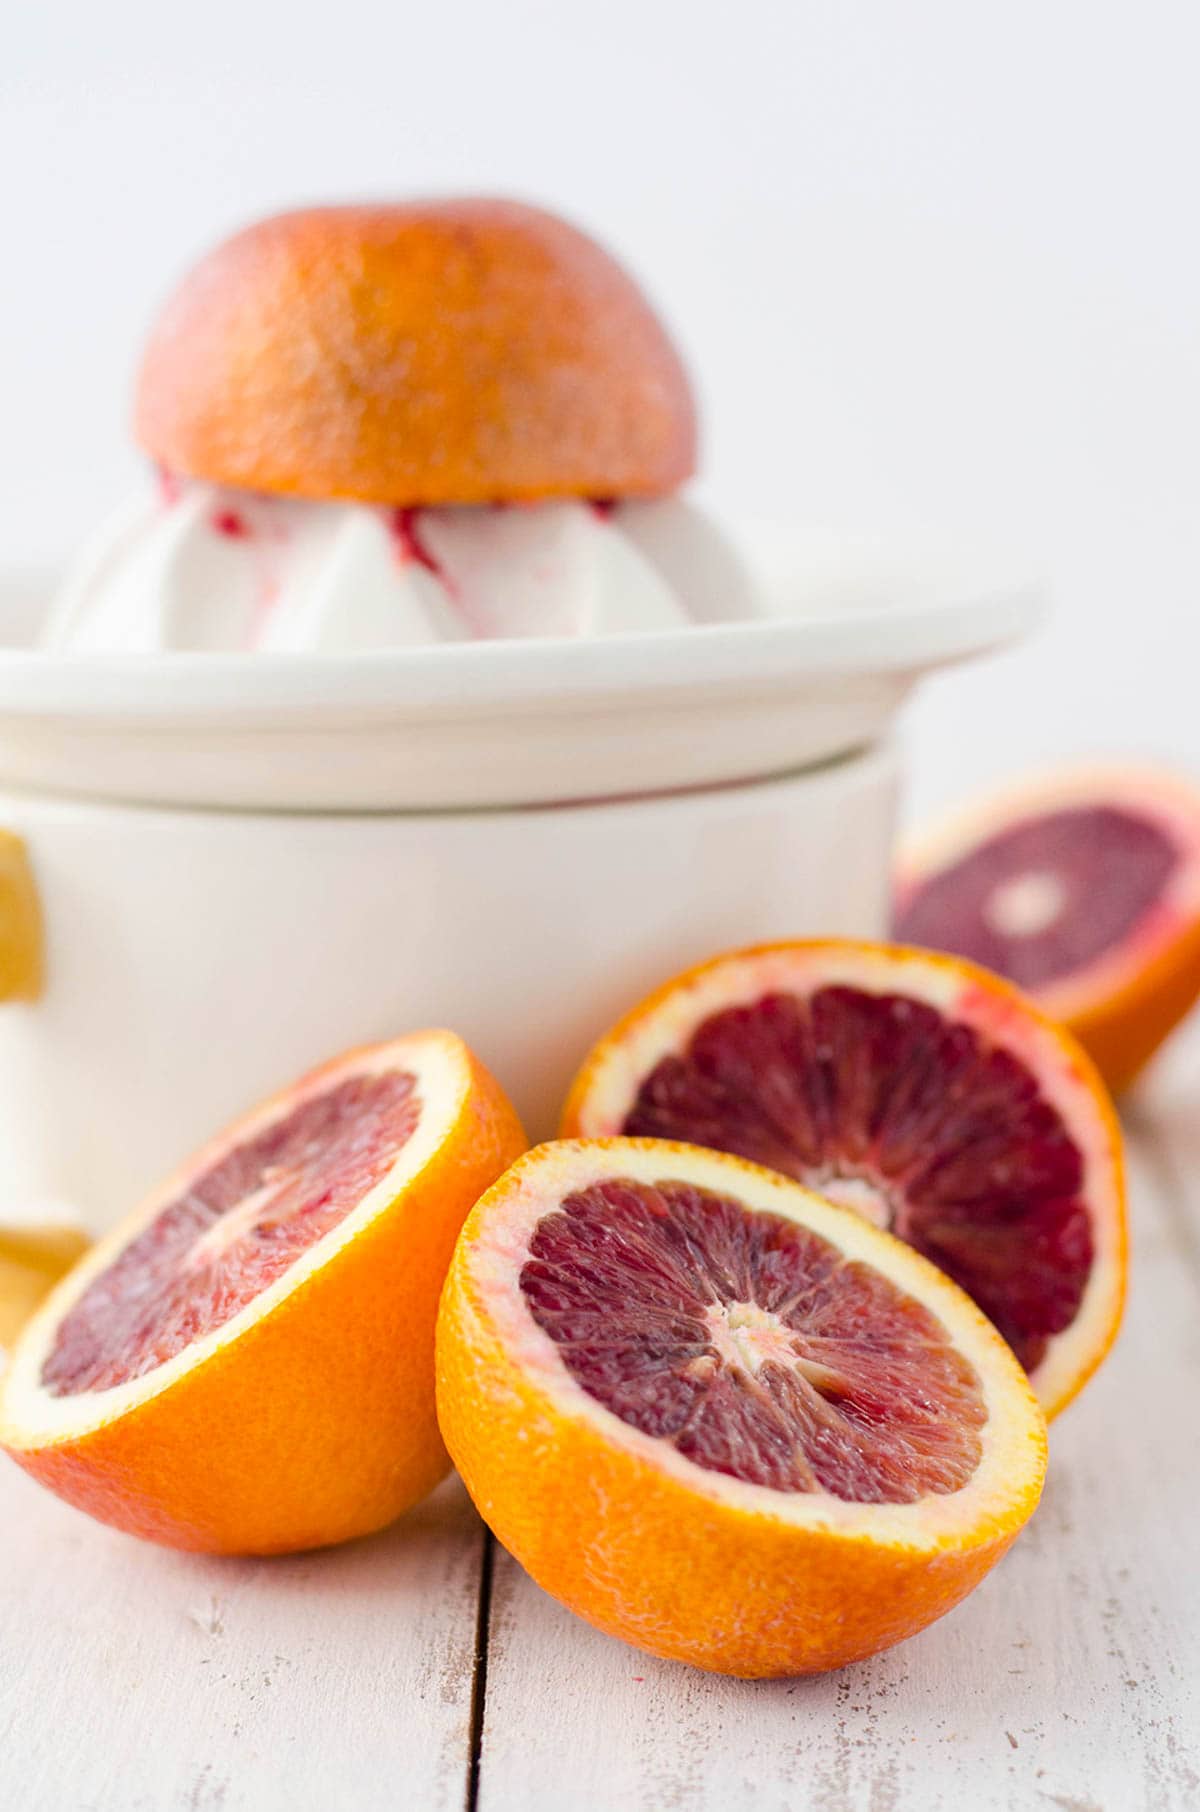 Blood orange sangria recipe by Sugar & Cloth, an award winning DIY and recipe blog.